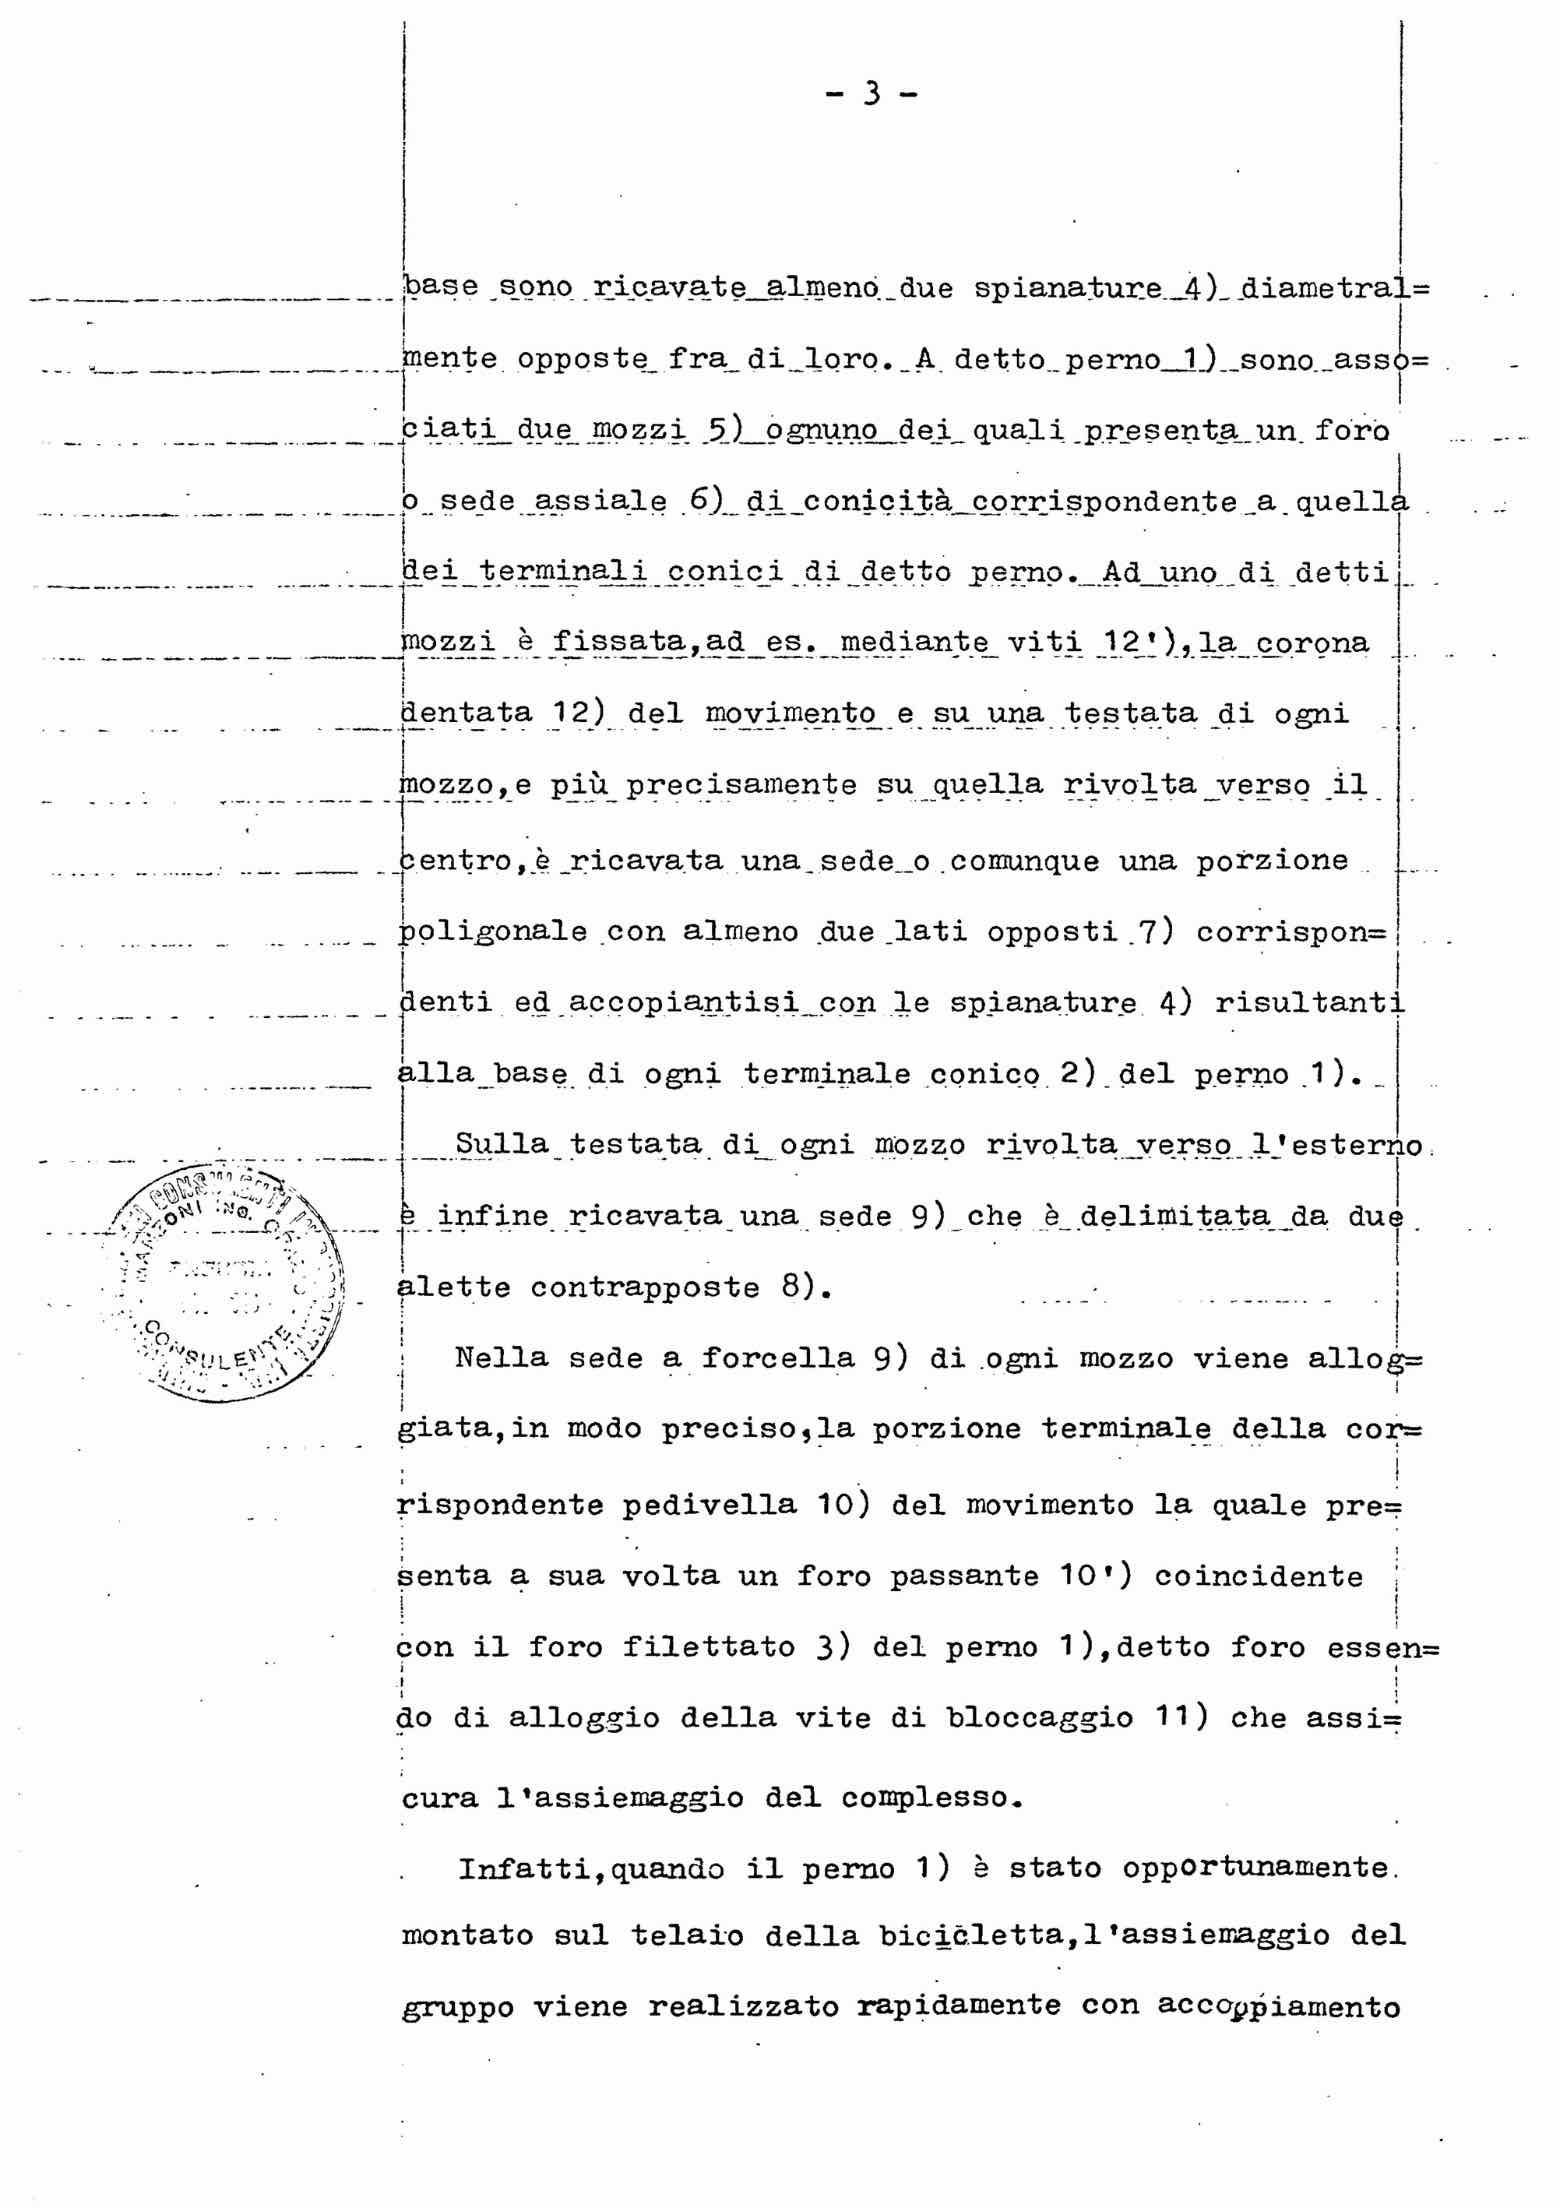 Italian Patent 1,053,056 - Ofmega scan 5 main image